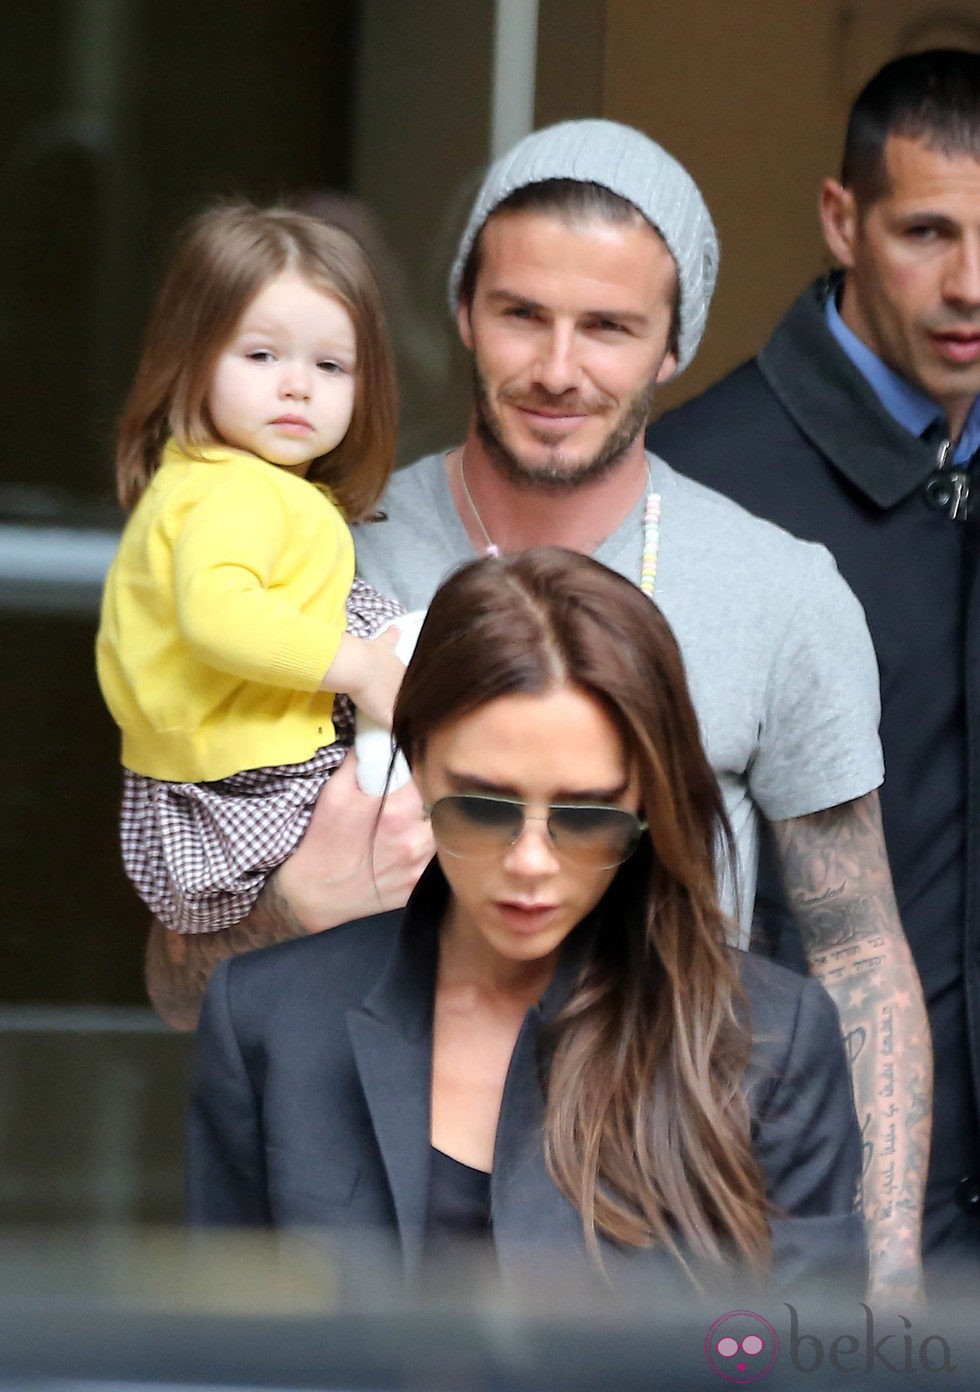 David Beckham con Harper Seven y Victoria Beckham en París